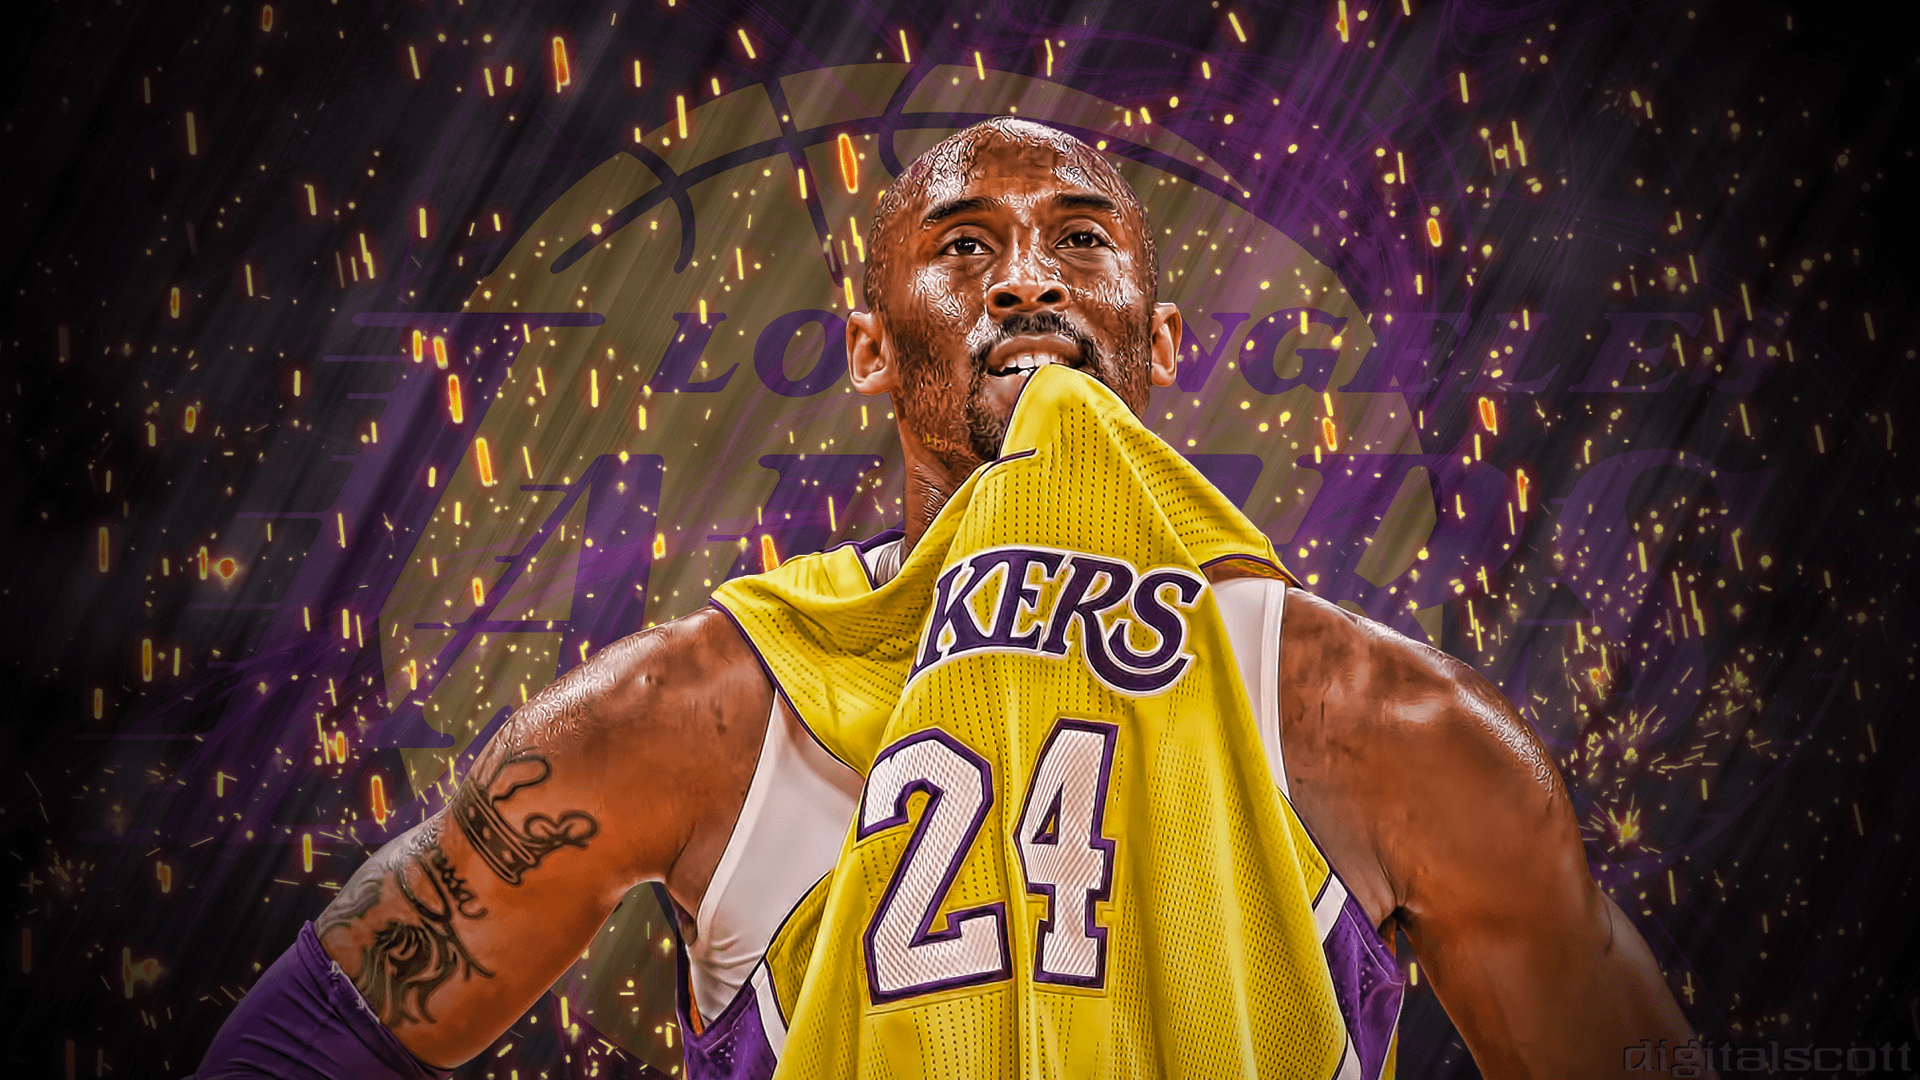 Kobe Bryant Wallpapers - Top Free Kobe Bryant Backgrounds ...